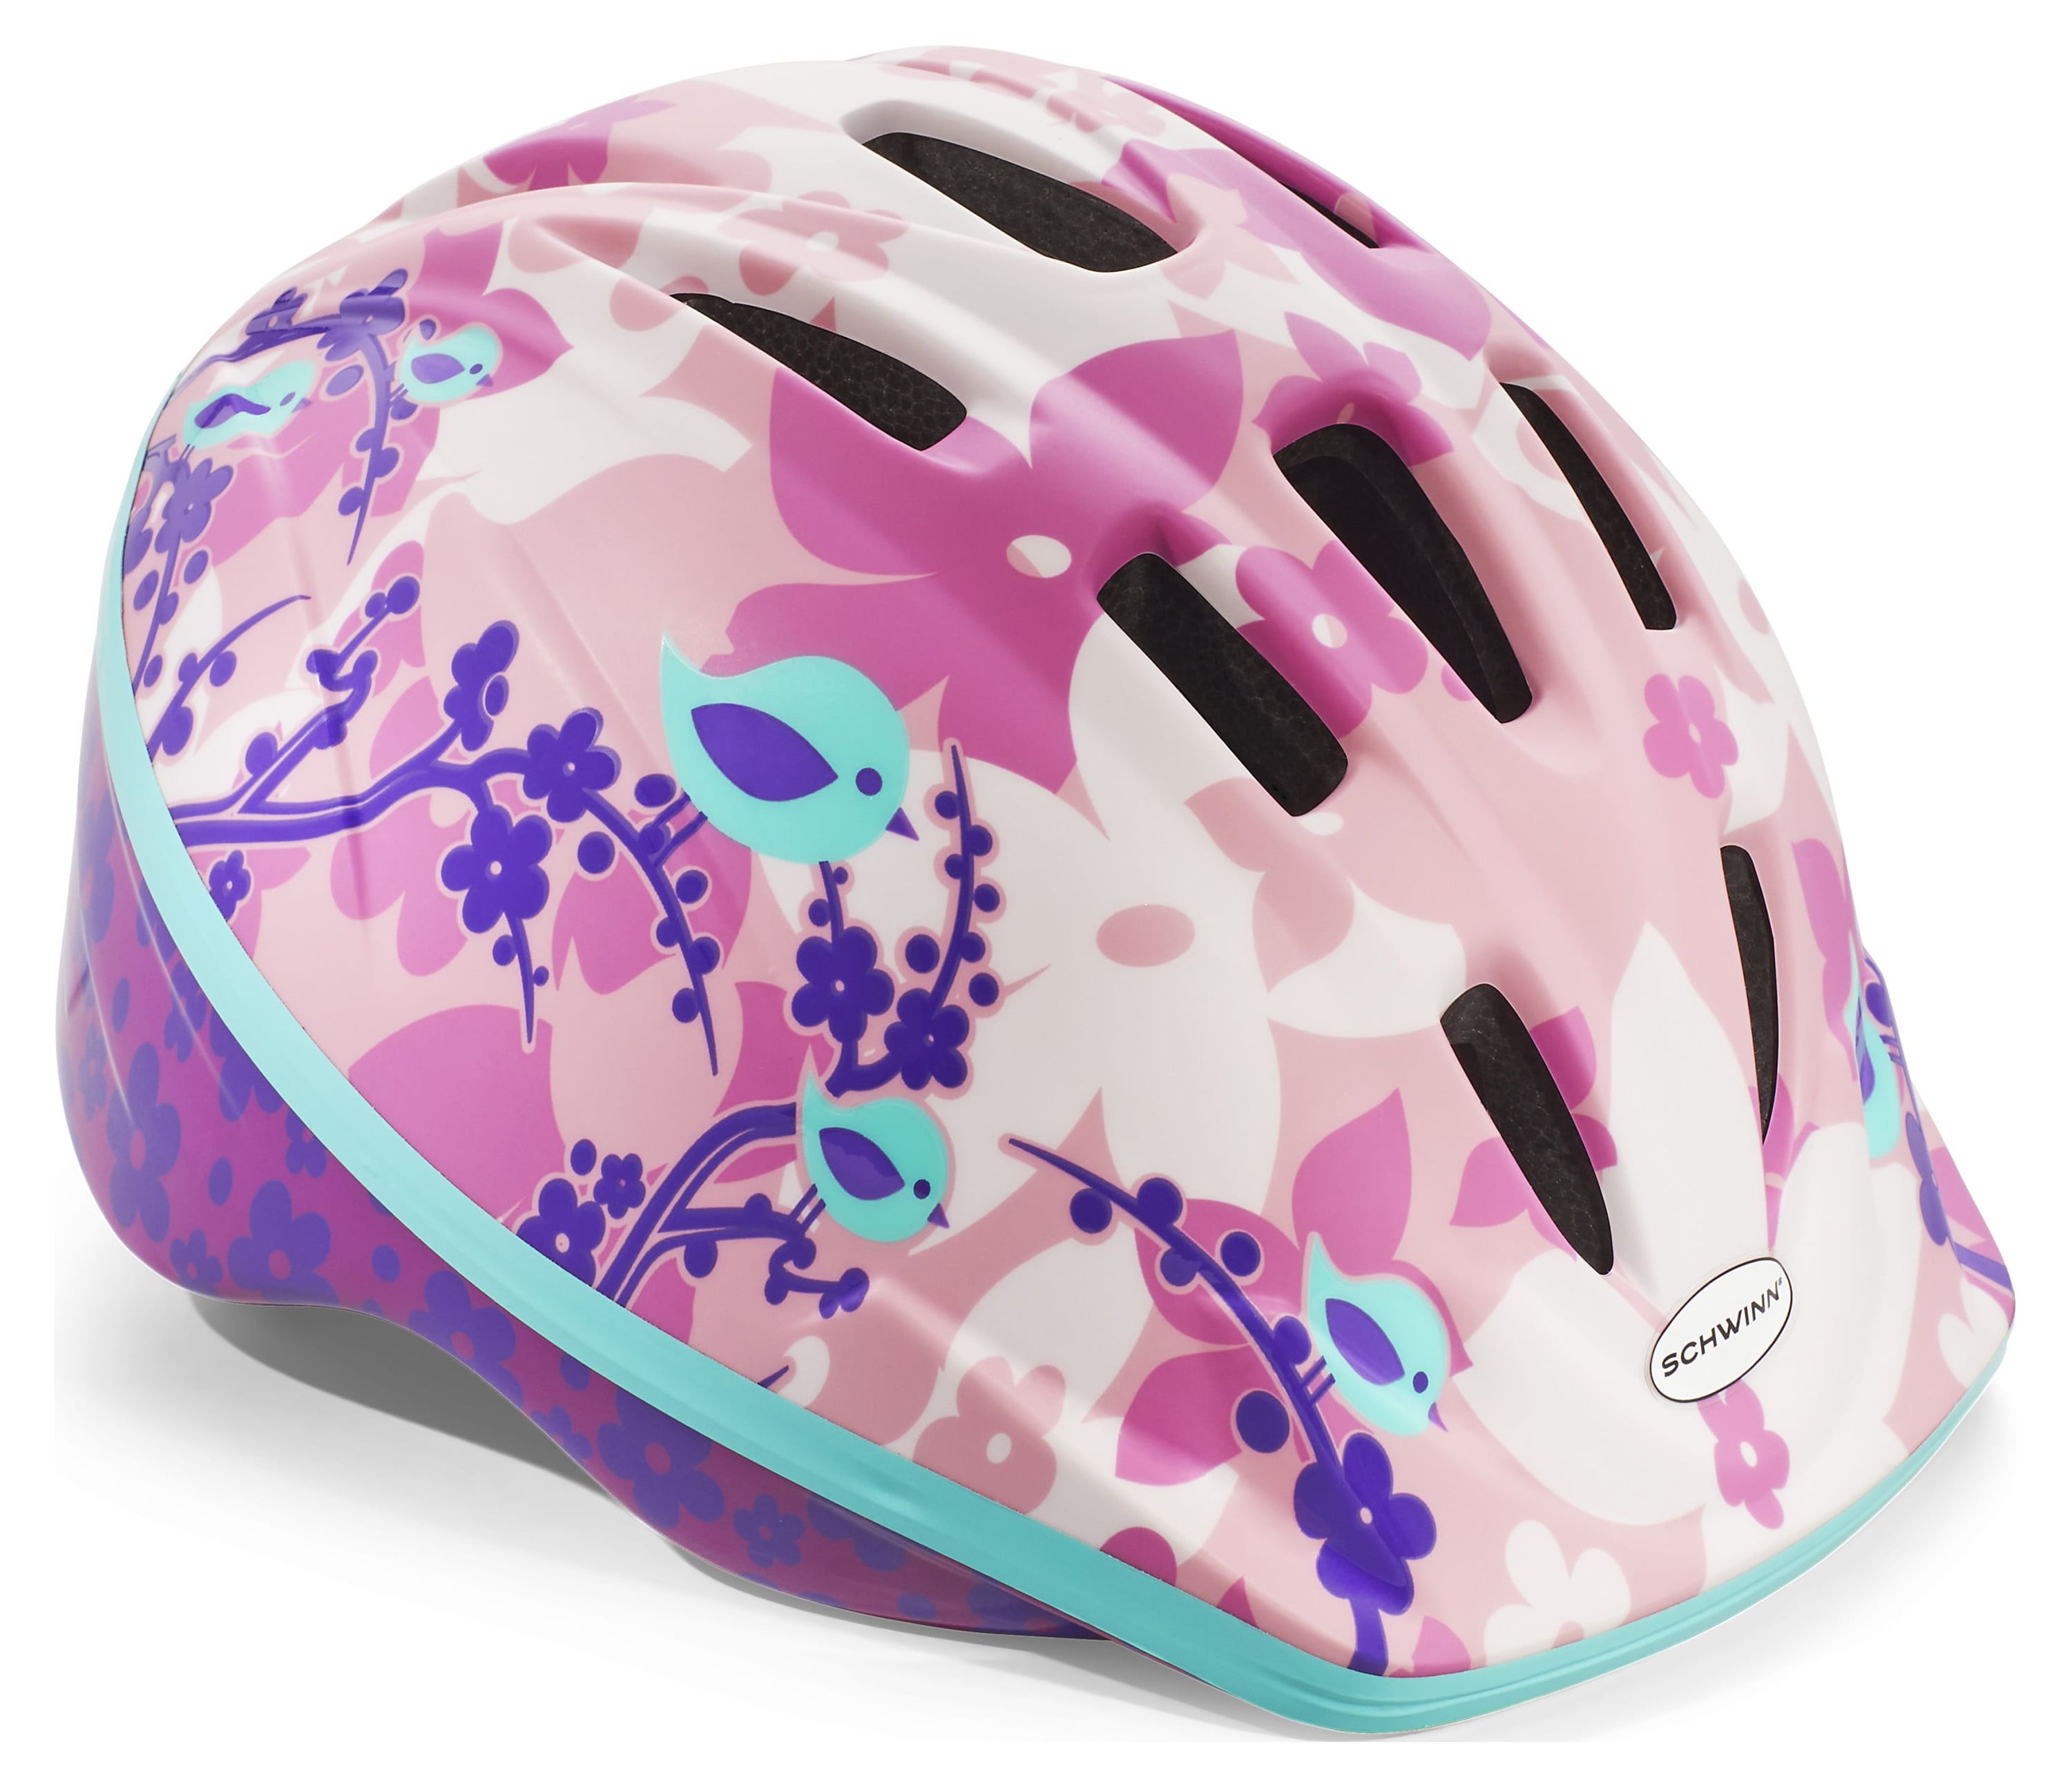 Schwinn Classic Bike Helmet for Kids, Ages 5-8, Pink - image 1 of 7